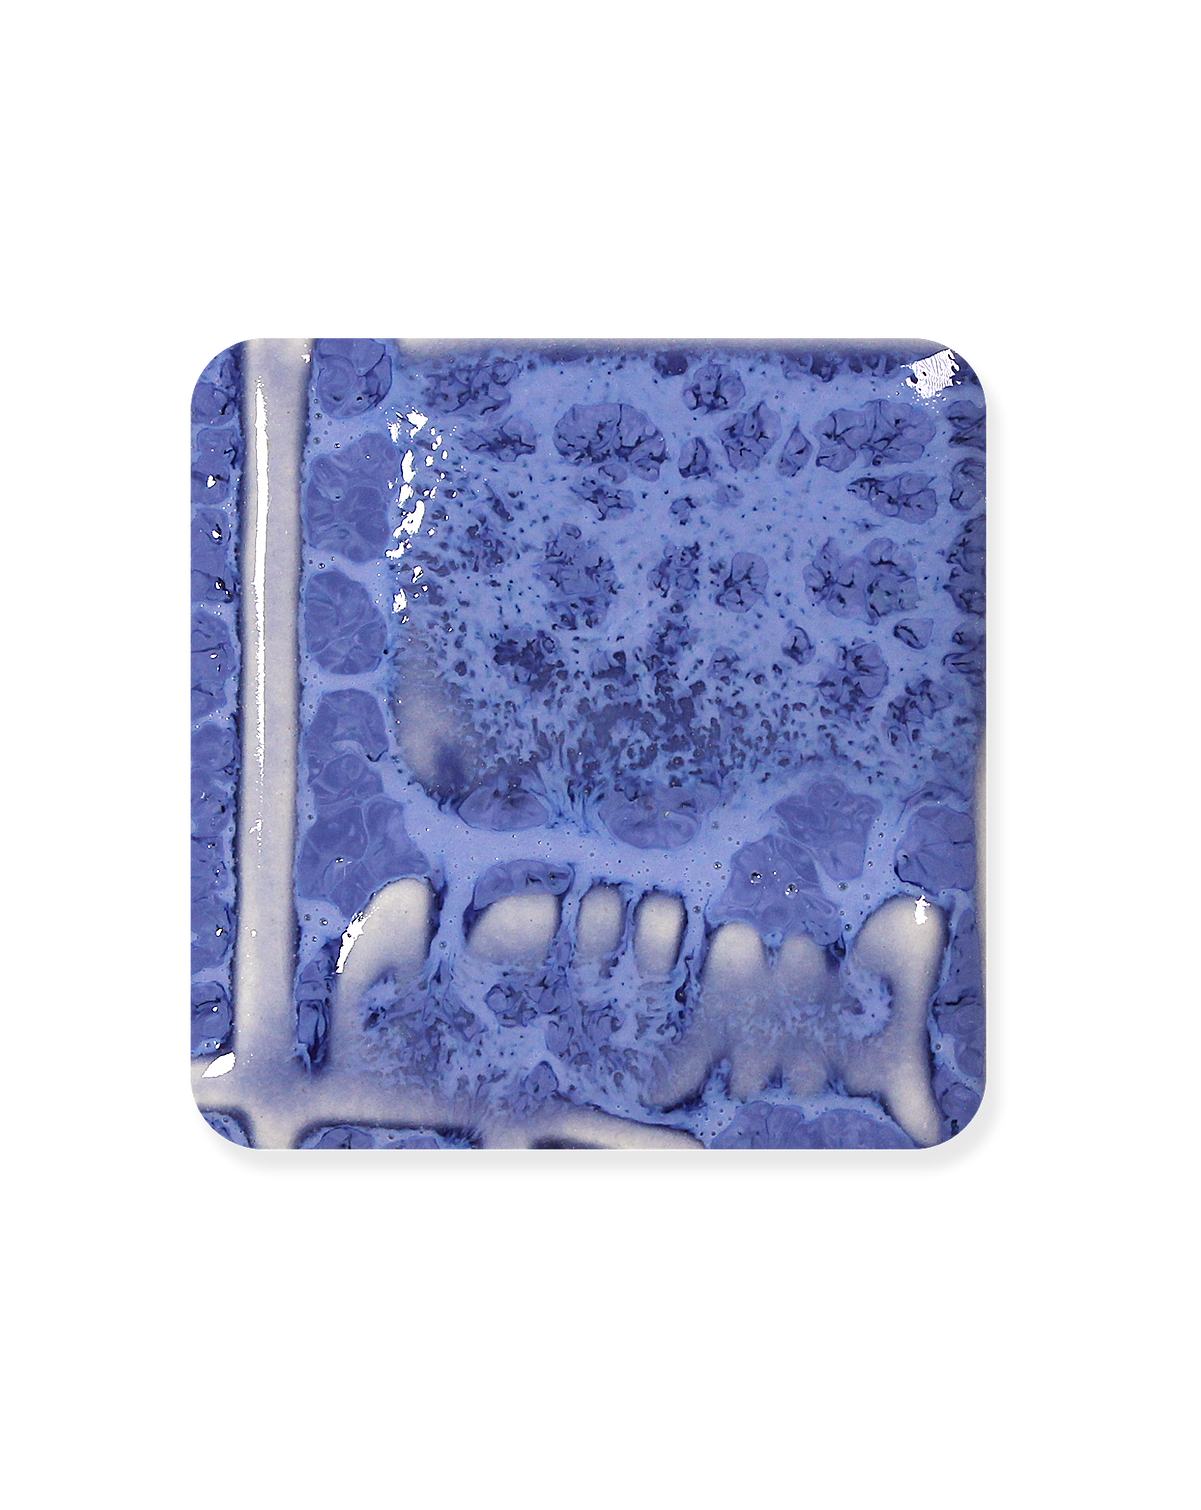 LAGUNA - Mystic & Dynasty Textured Series - WC-111 Spotted Blue 斑點藍 (4oz)